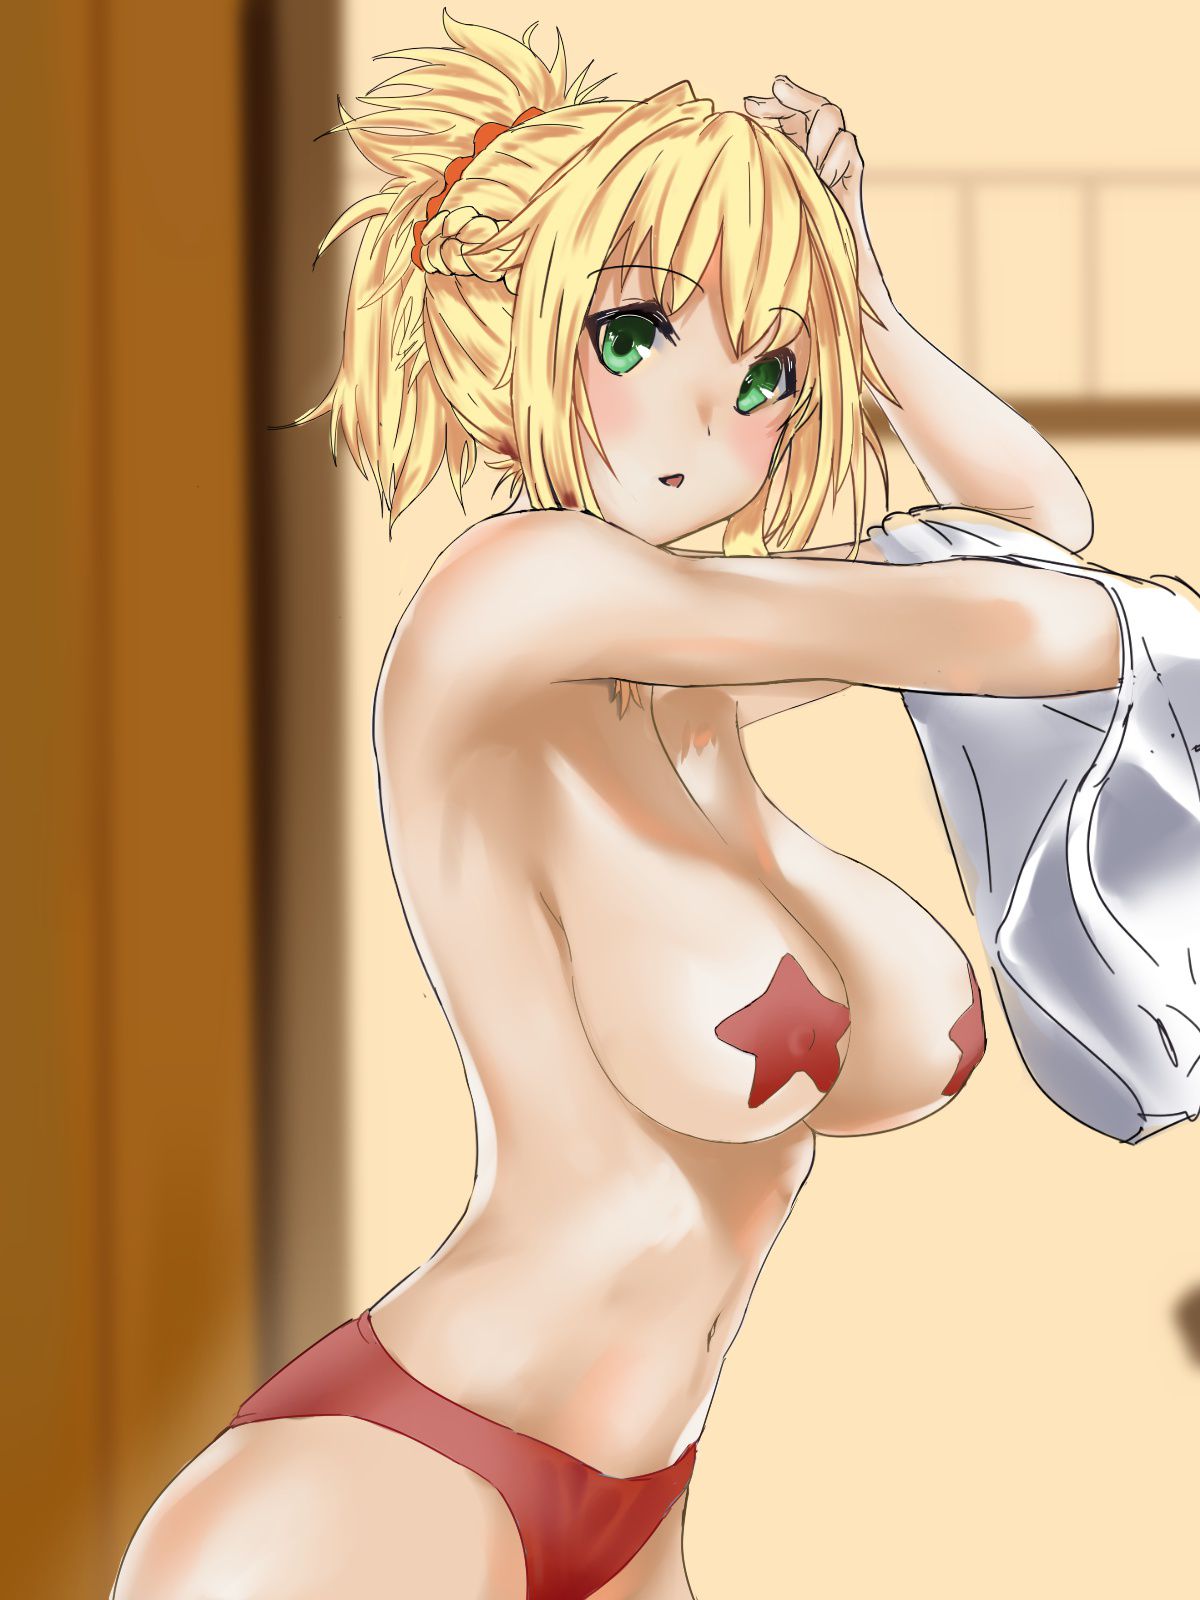 [Fate] erotic image of girl swordsman mode red! Part 5 2